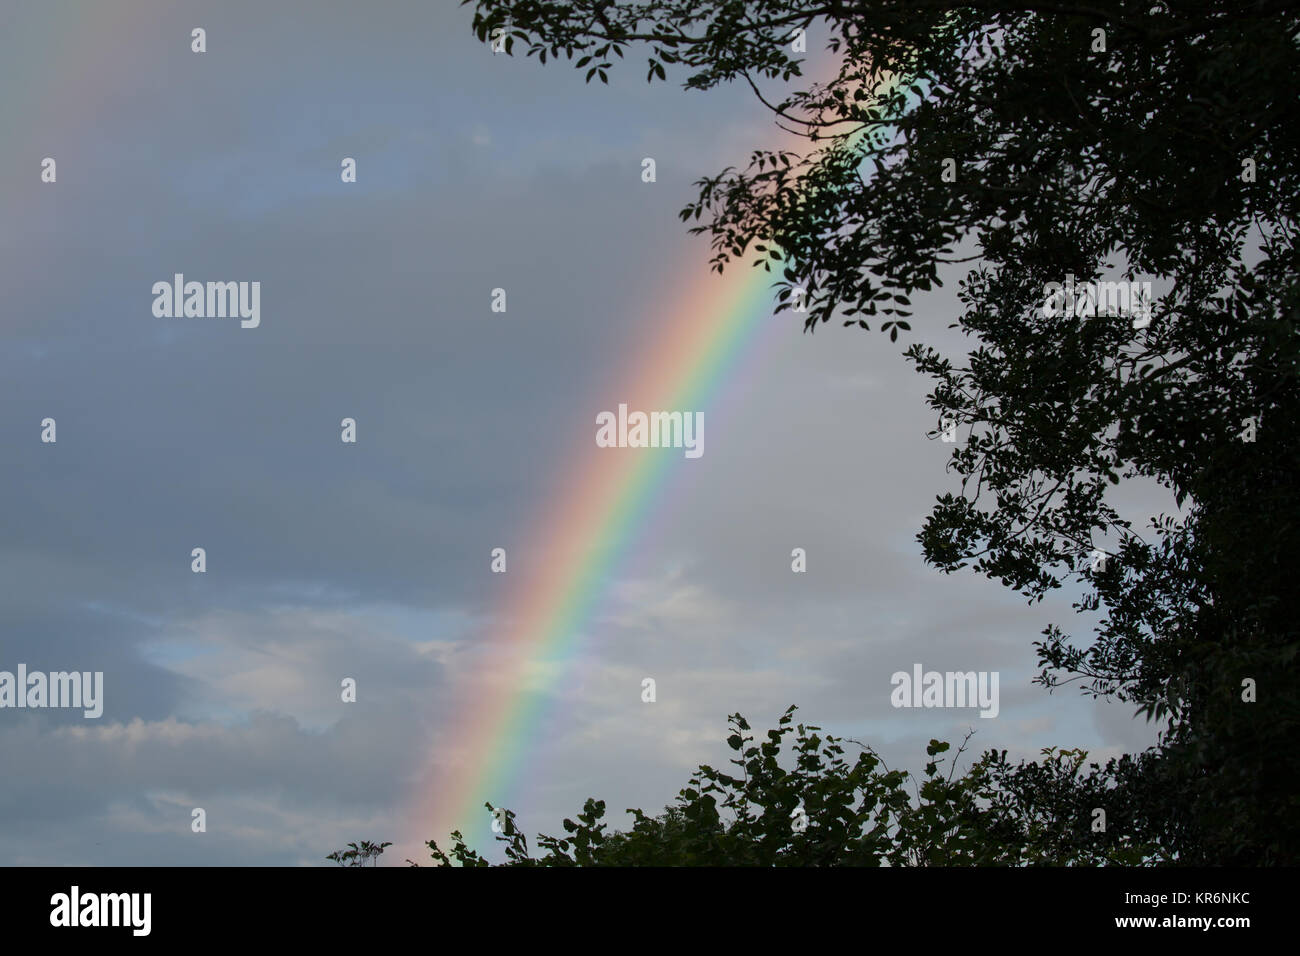 Rainbow and Tree Silhouettes Stock Photo